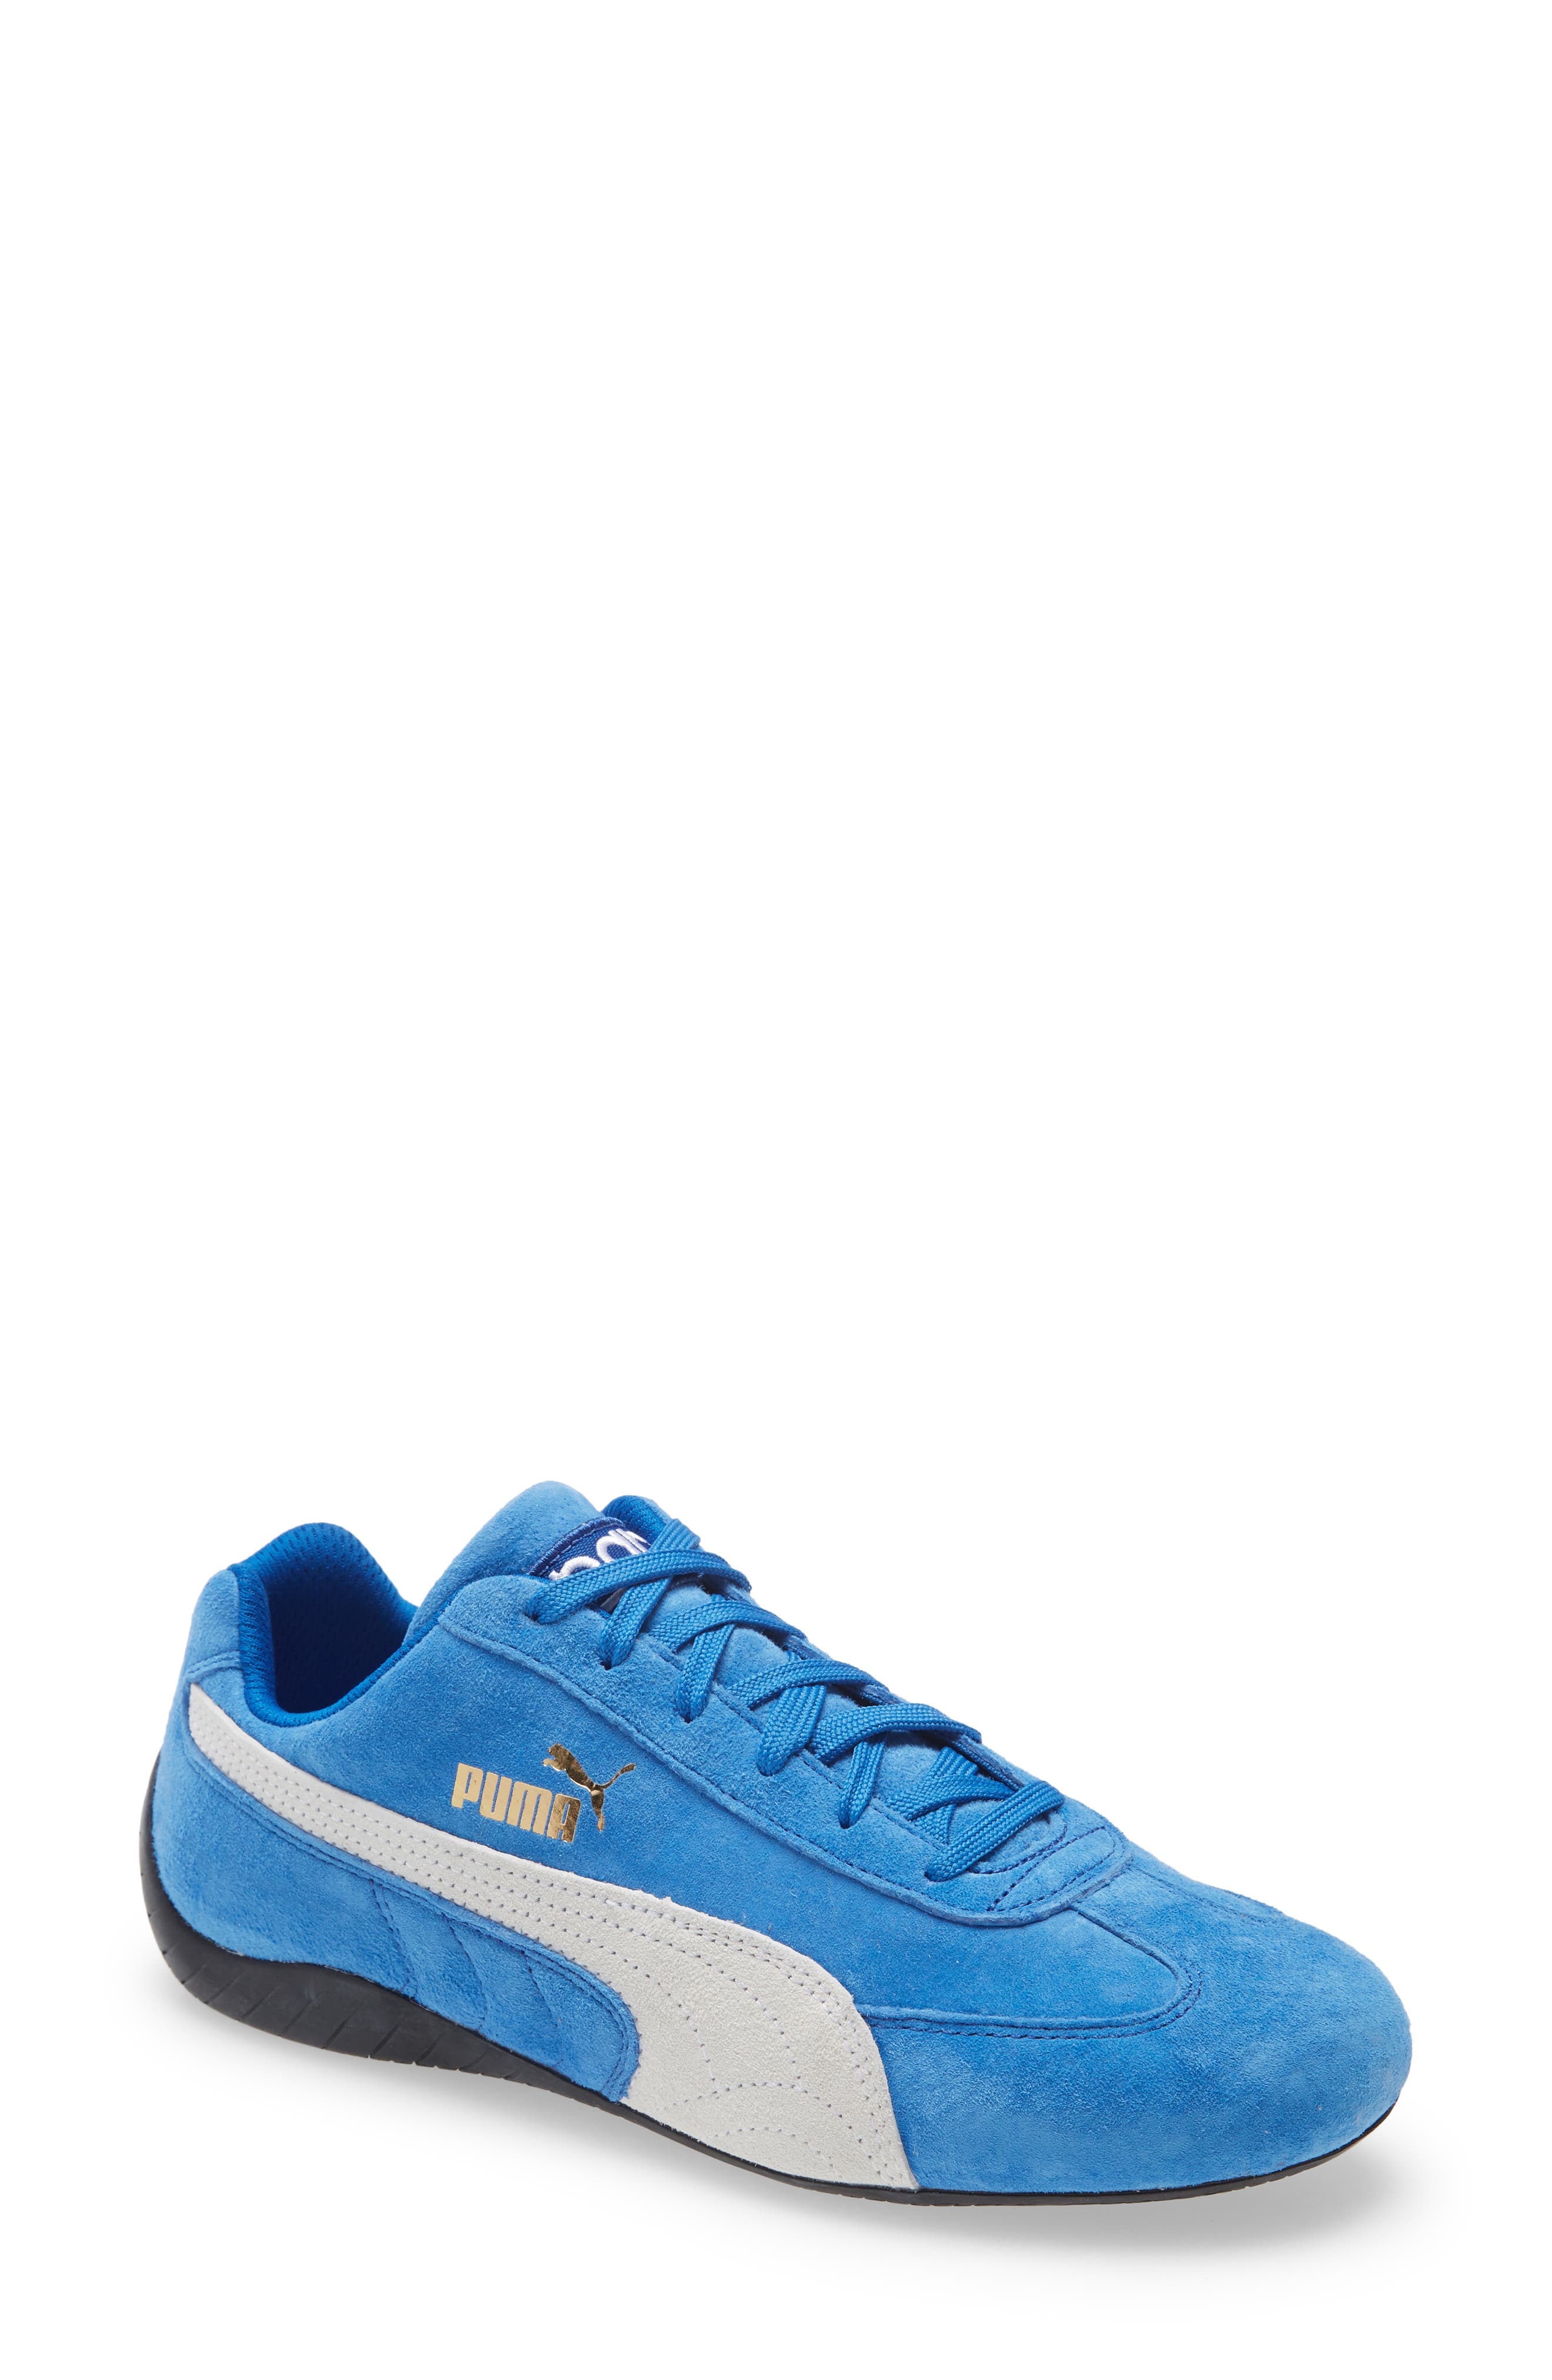 blue tennis shoes womens